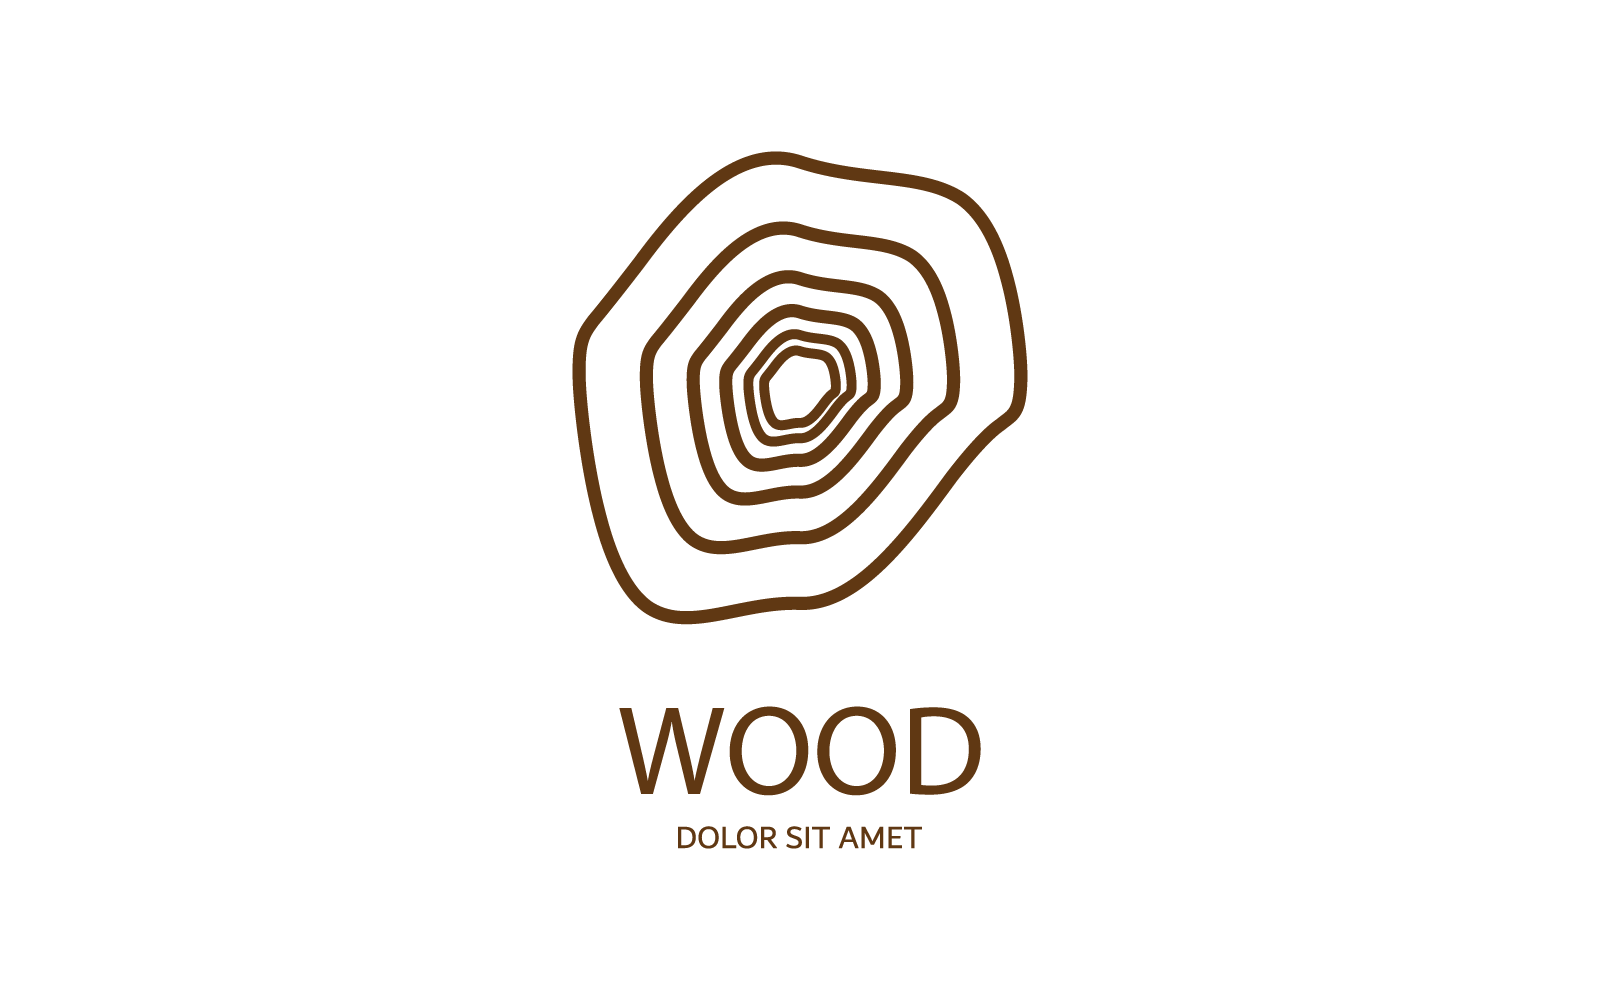 Wood logo vector icon flat design